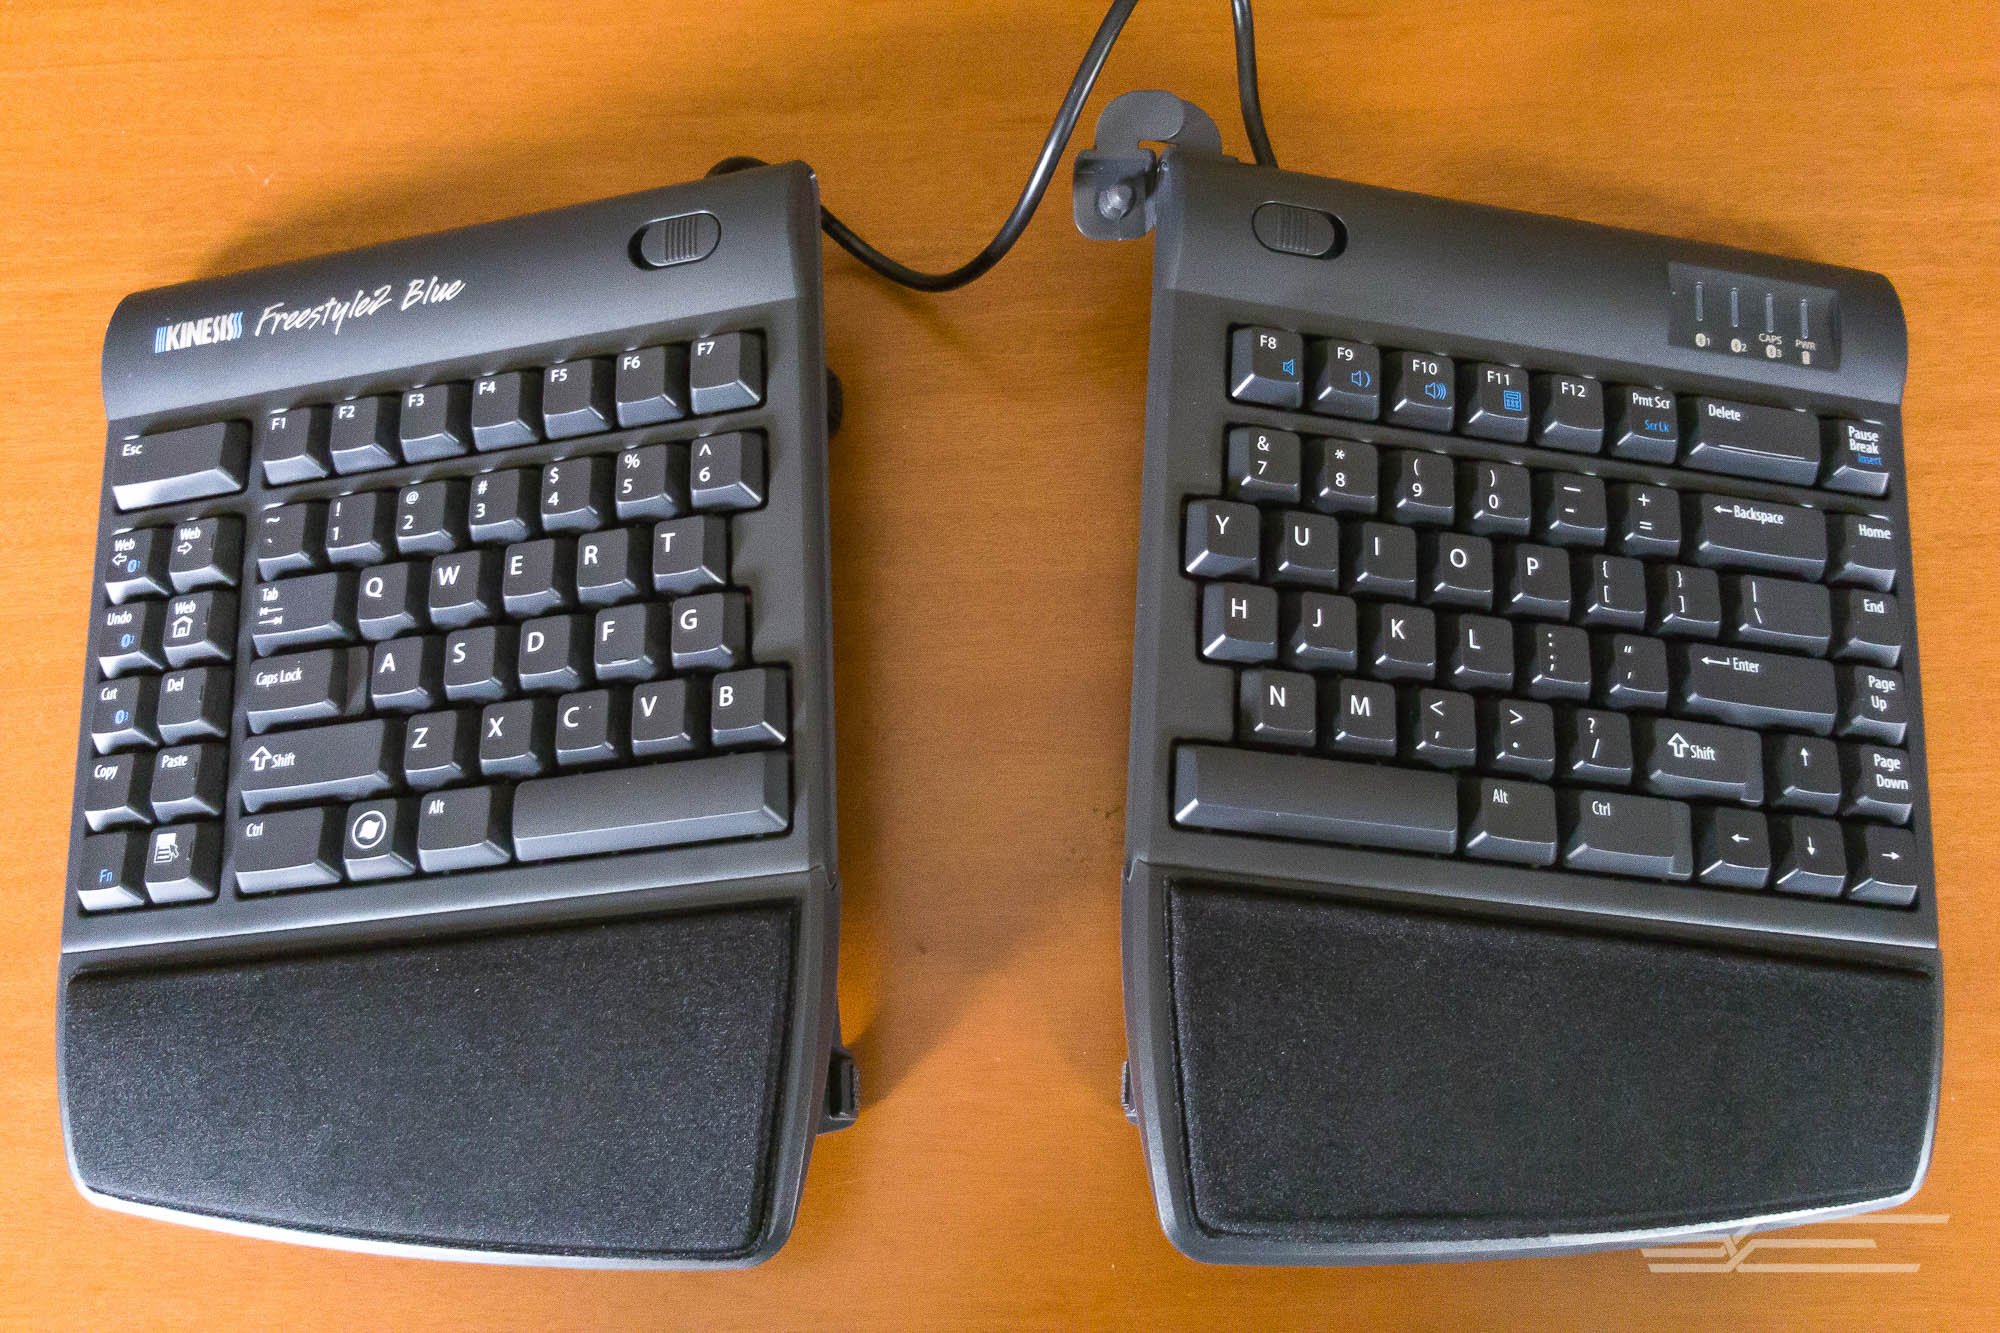 microsoft ergonomic keyboard mac compatible